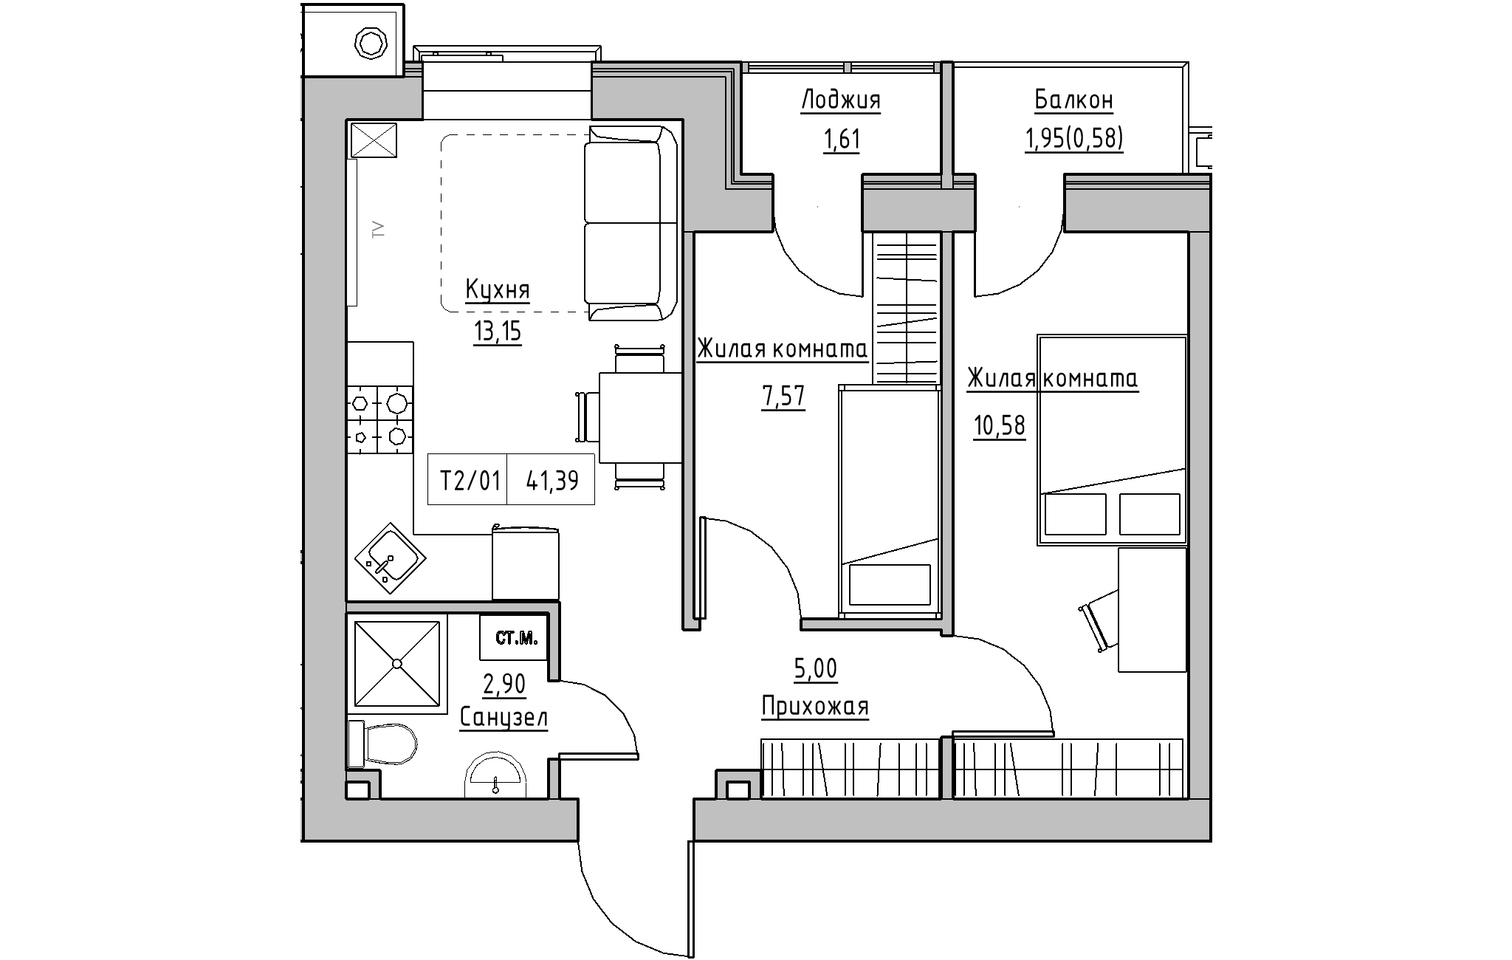 Planning 2-rm flats area 41.39m2, KS-013-04/0009.